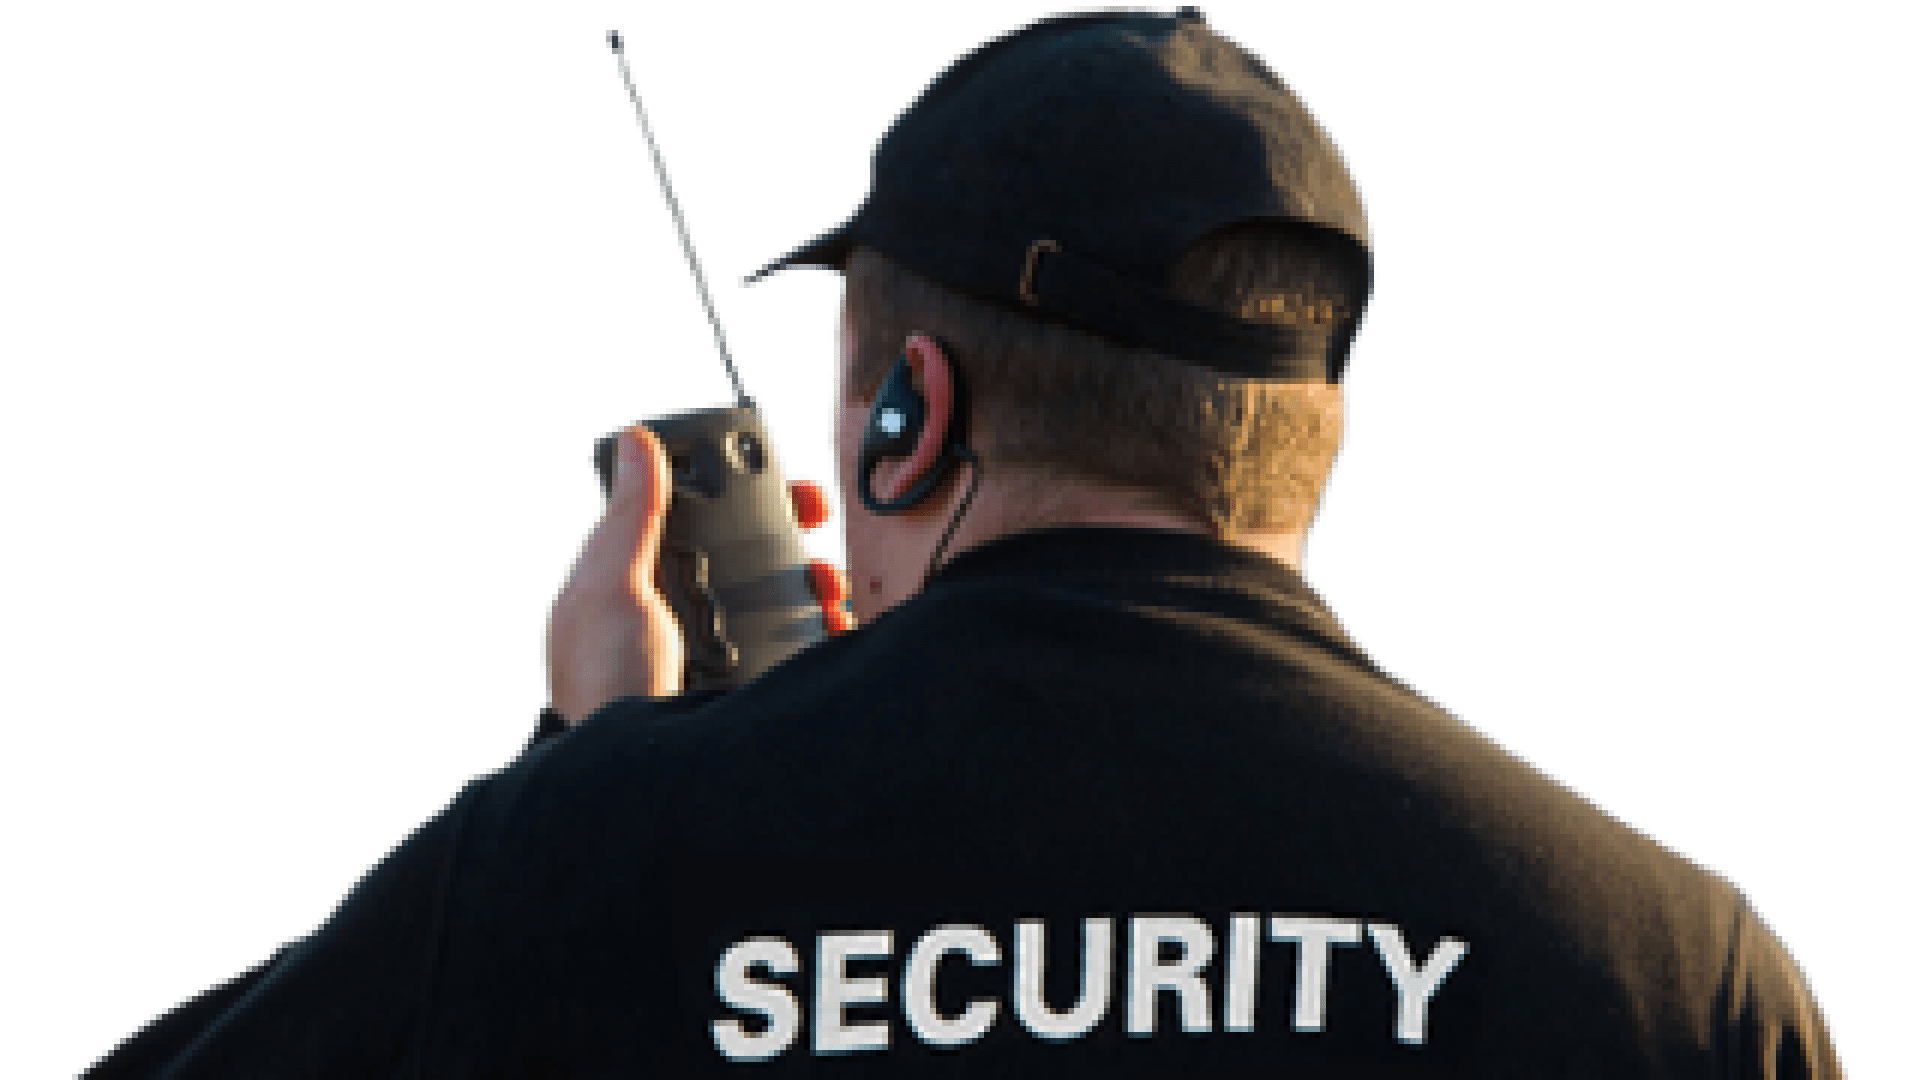 security-guards